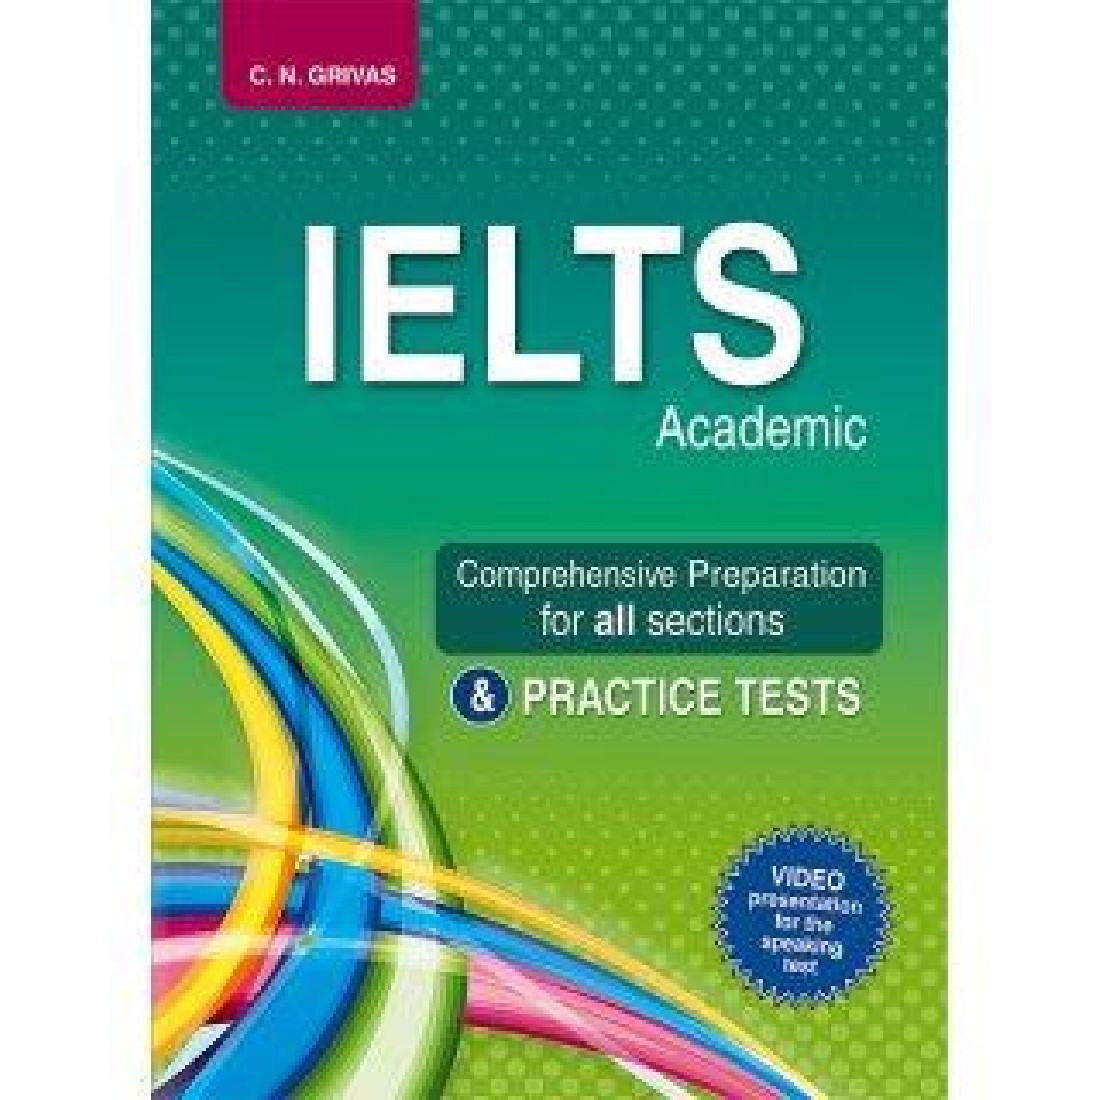 Reading test pdf. IELTS. IELTS (Академический). IELTS preparation. IELTS Academic Practice Tests.